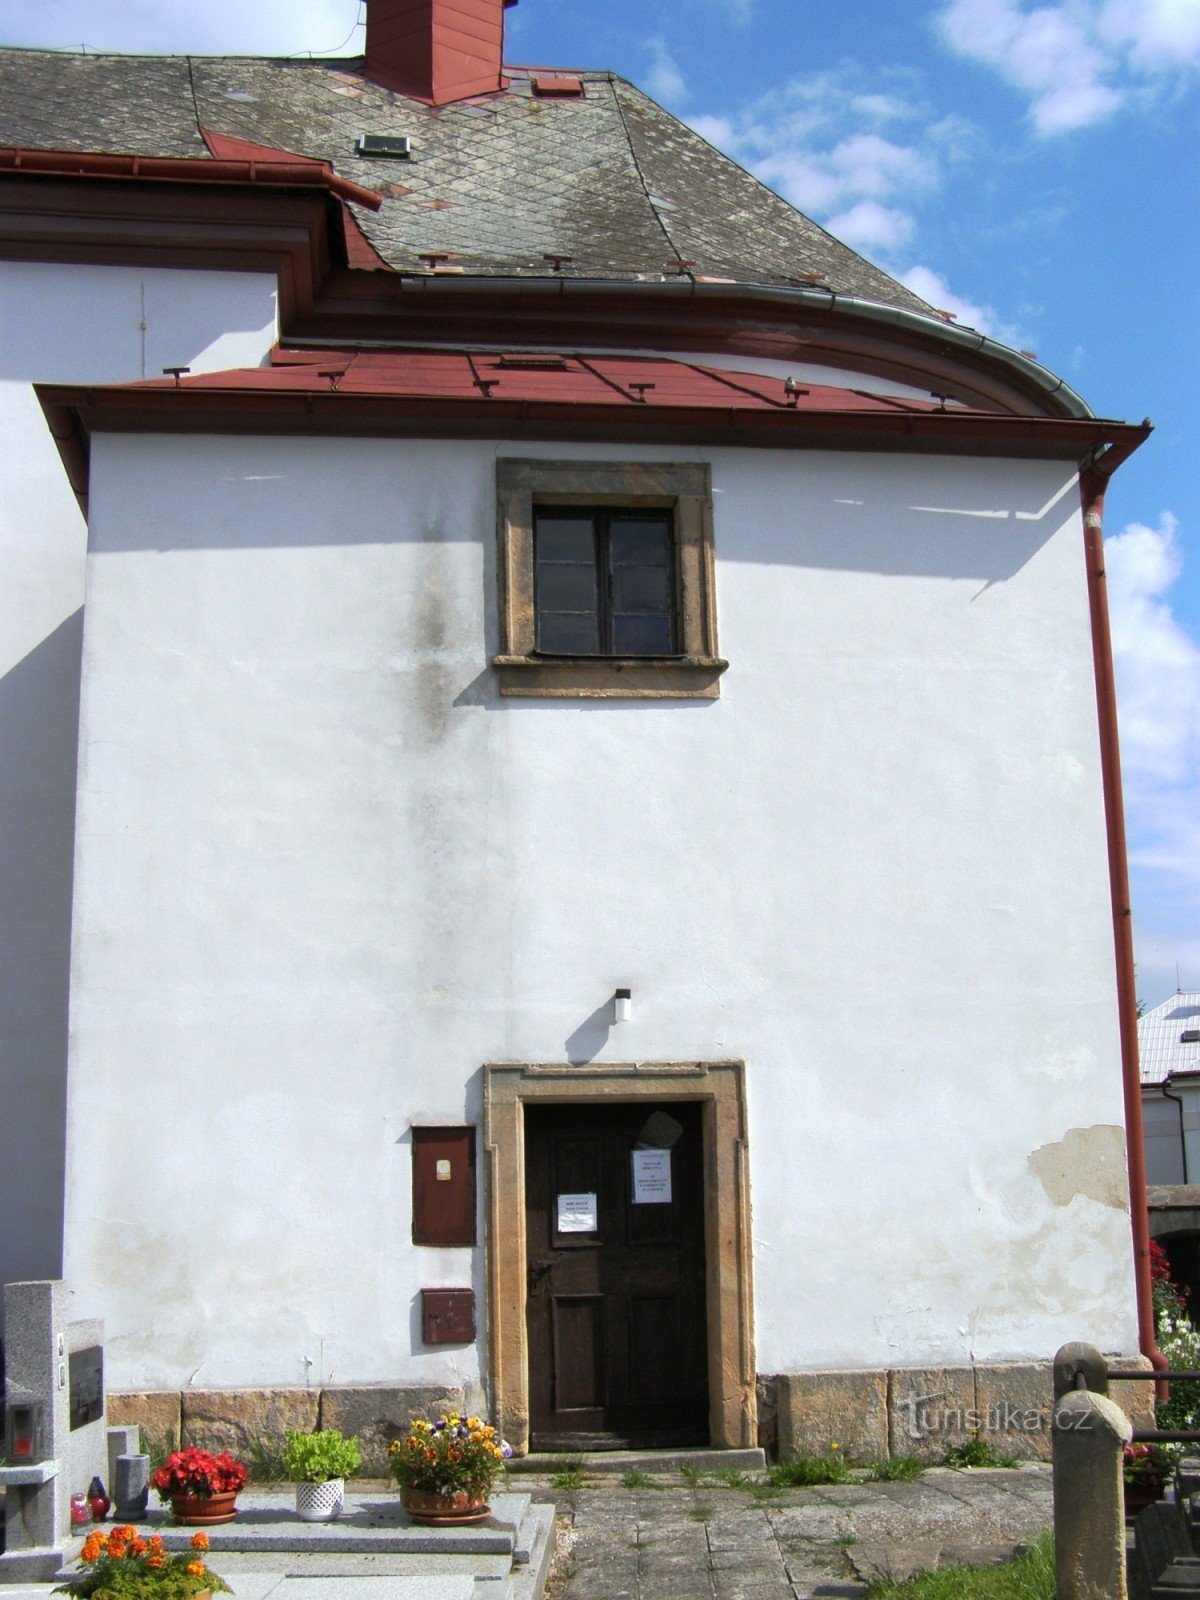 Nemyčeves - Kirche St. Peter und Paul